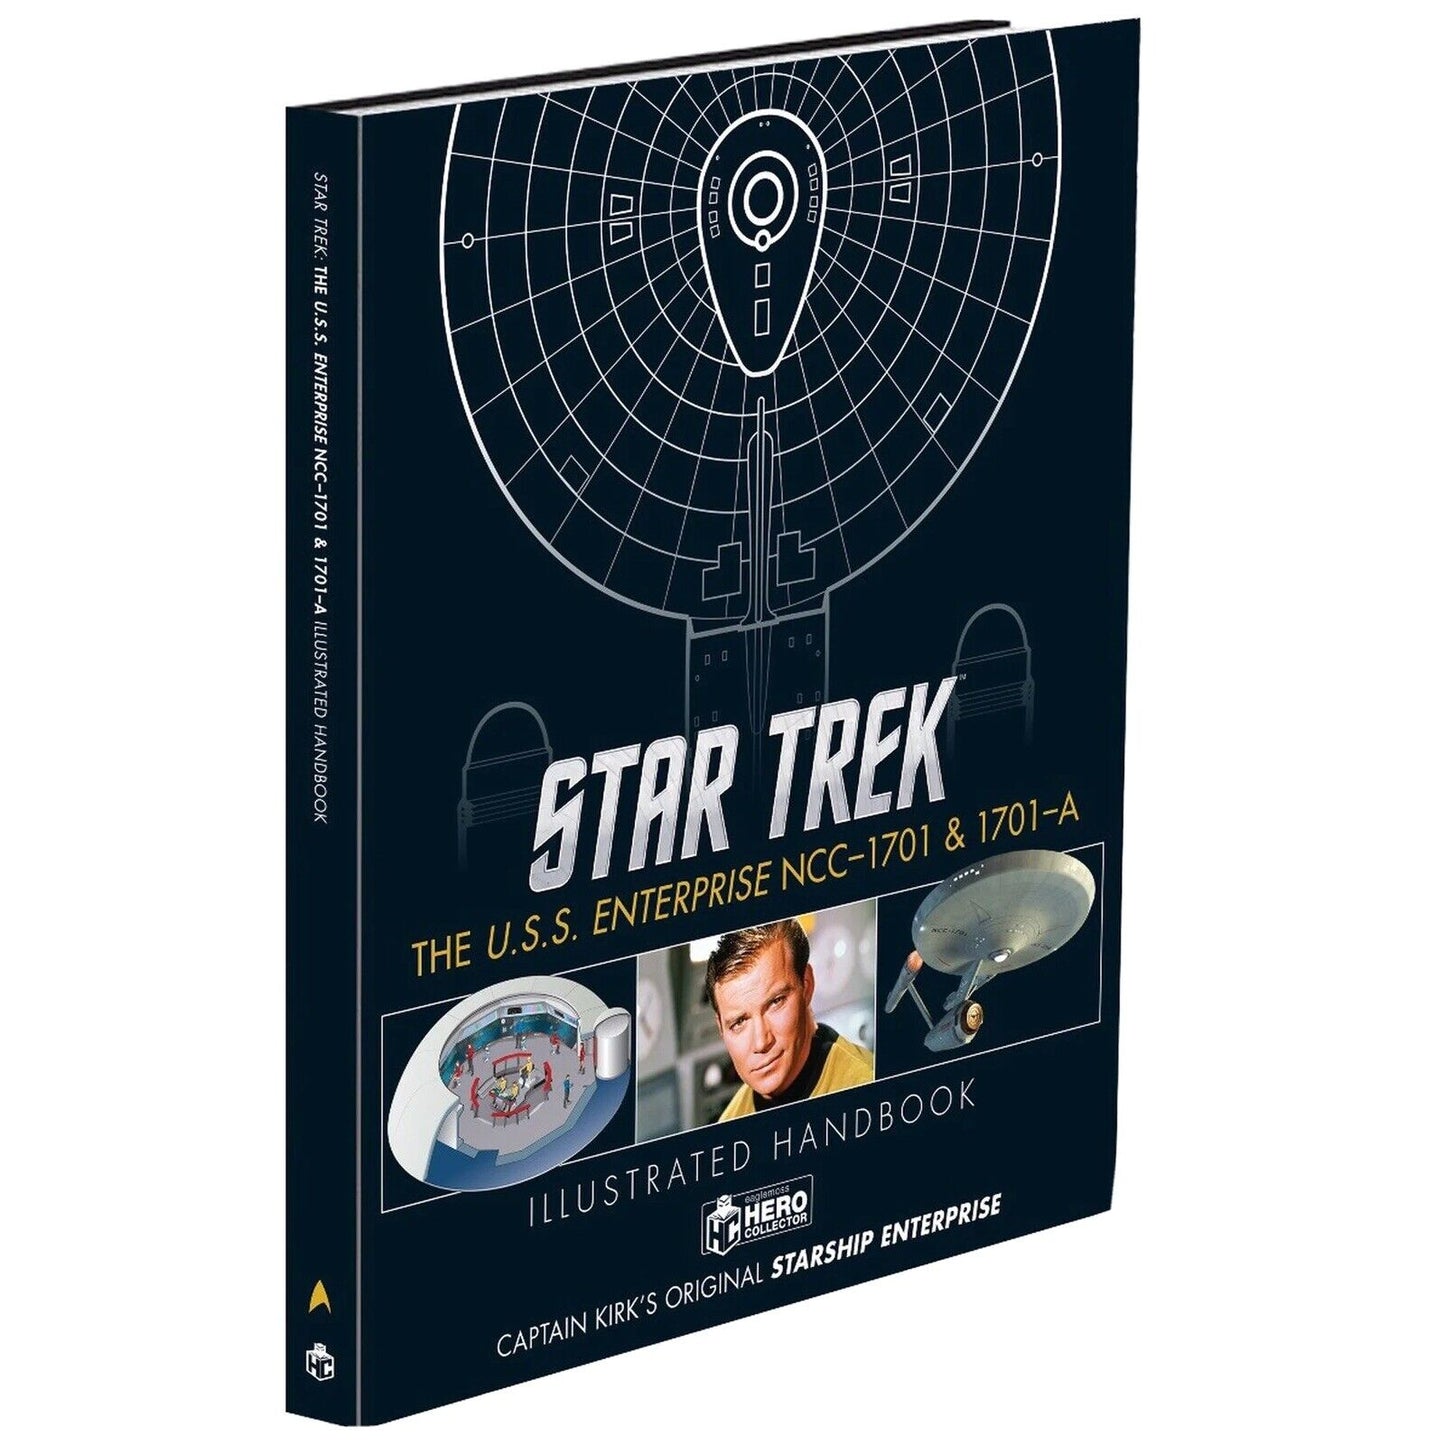 U.S.S. Enterprise NCC-1701 & 1701-A Handbook & Diecast Ship (Eaglemoss / Star Trek)